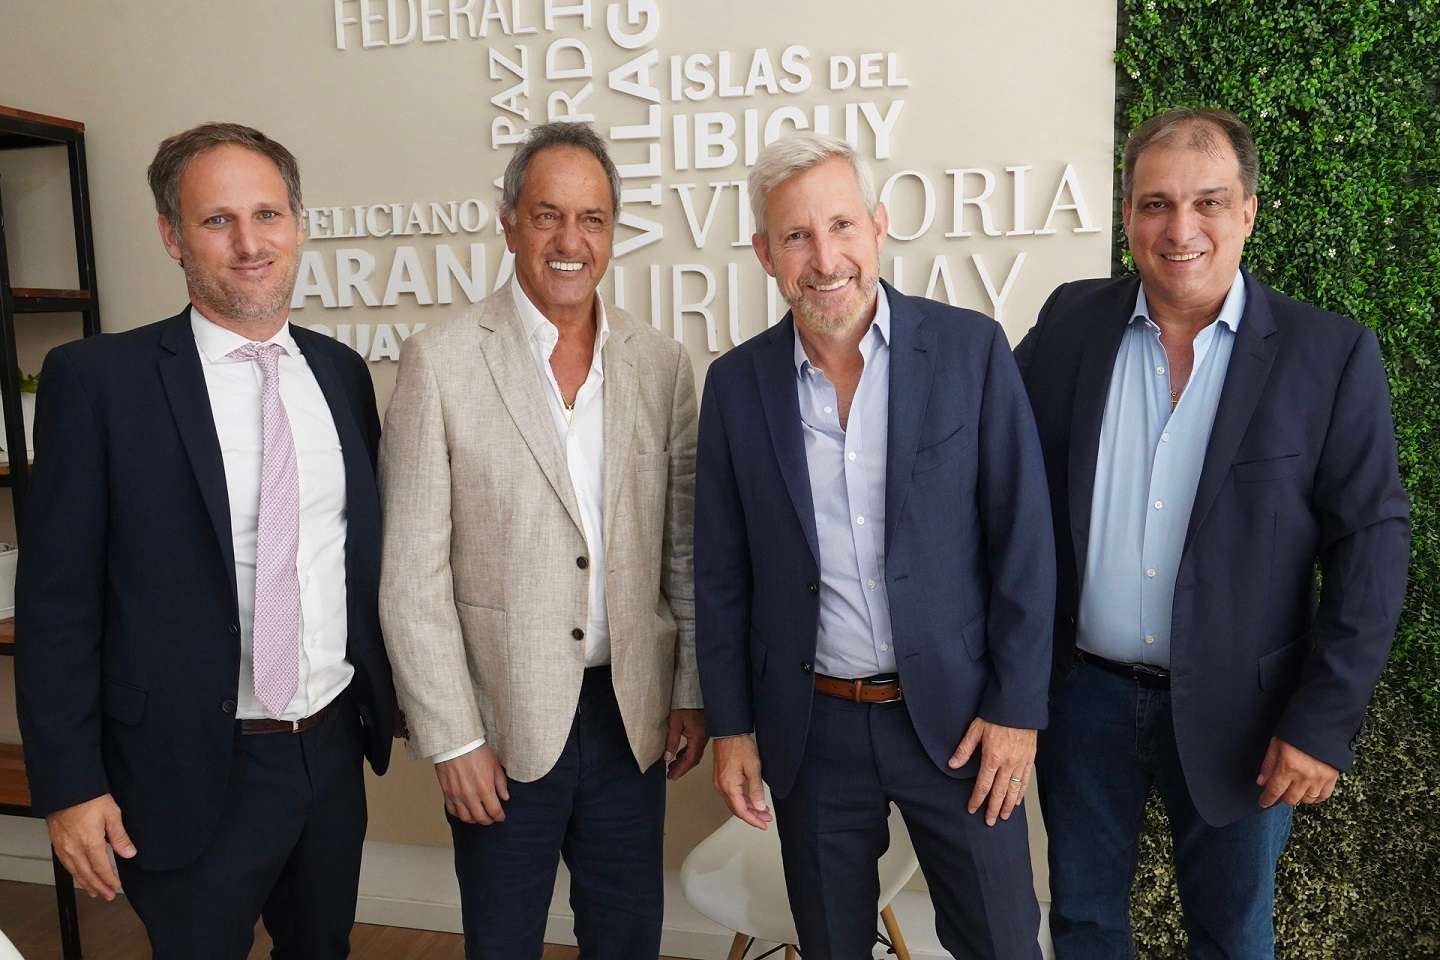 Frigerio se reunió con empresarios brasileños interesados en invertir en Entre Ríos